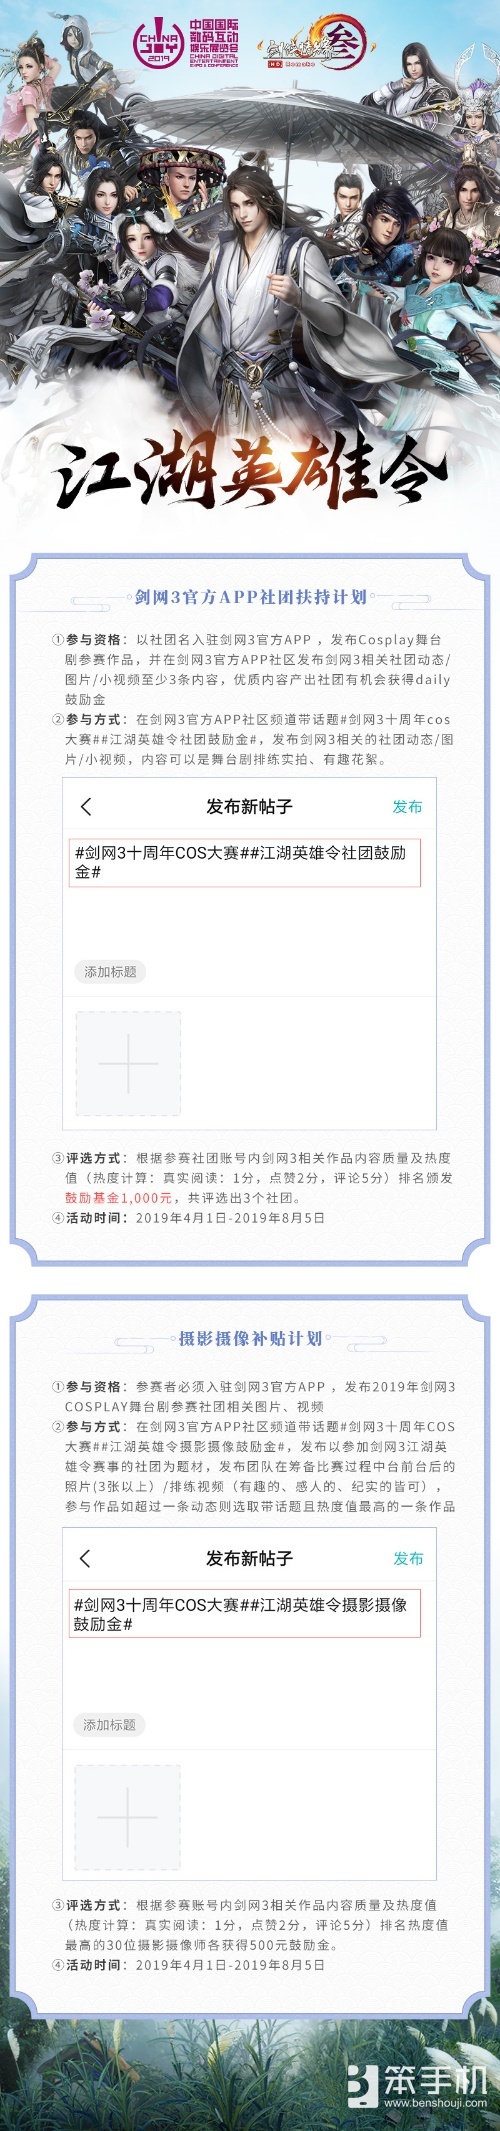 ChinaJoy携手剑网3再次召集“江湖英雄令”！